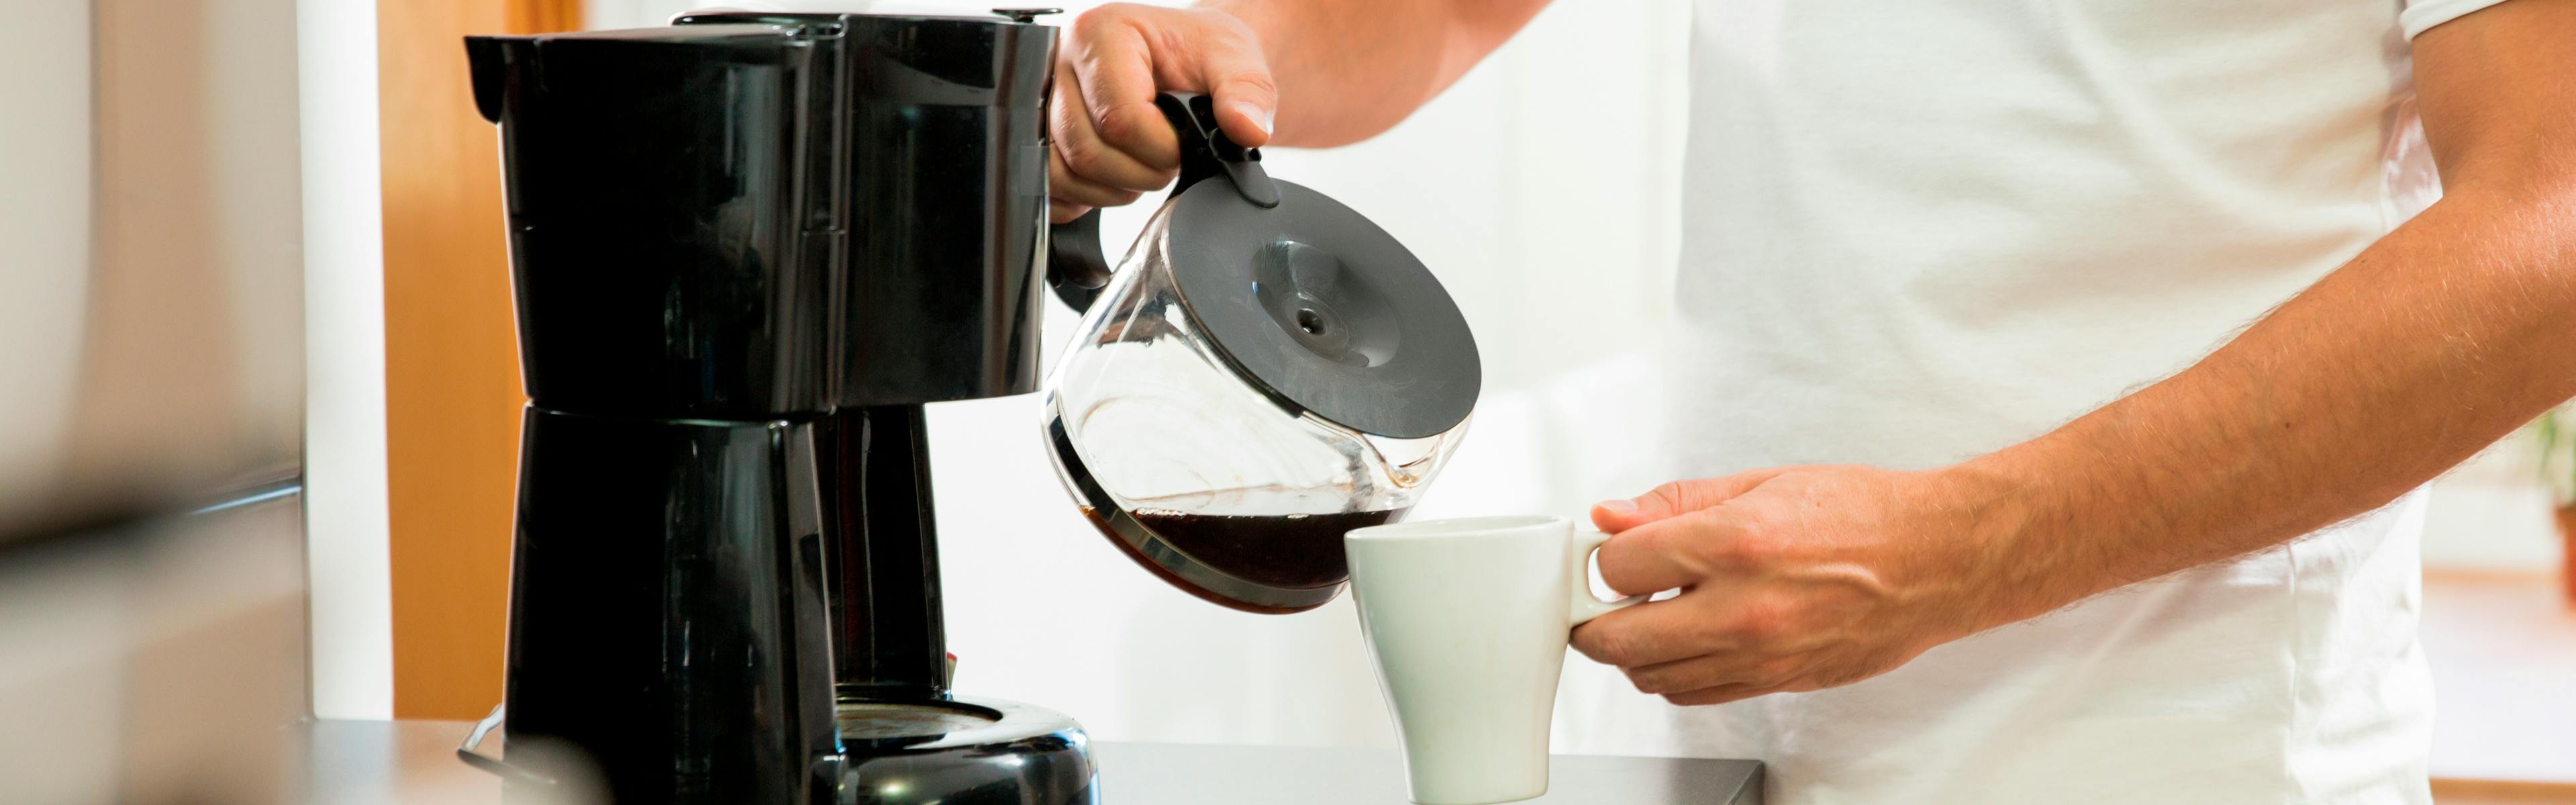 1.3L Cold Brew Coffee Maker – Coffee Bear